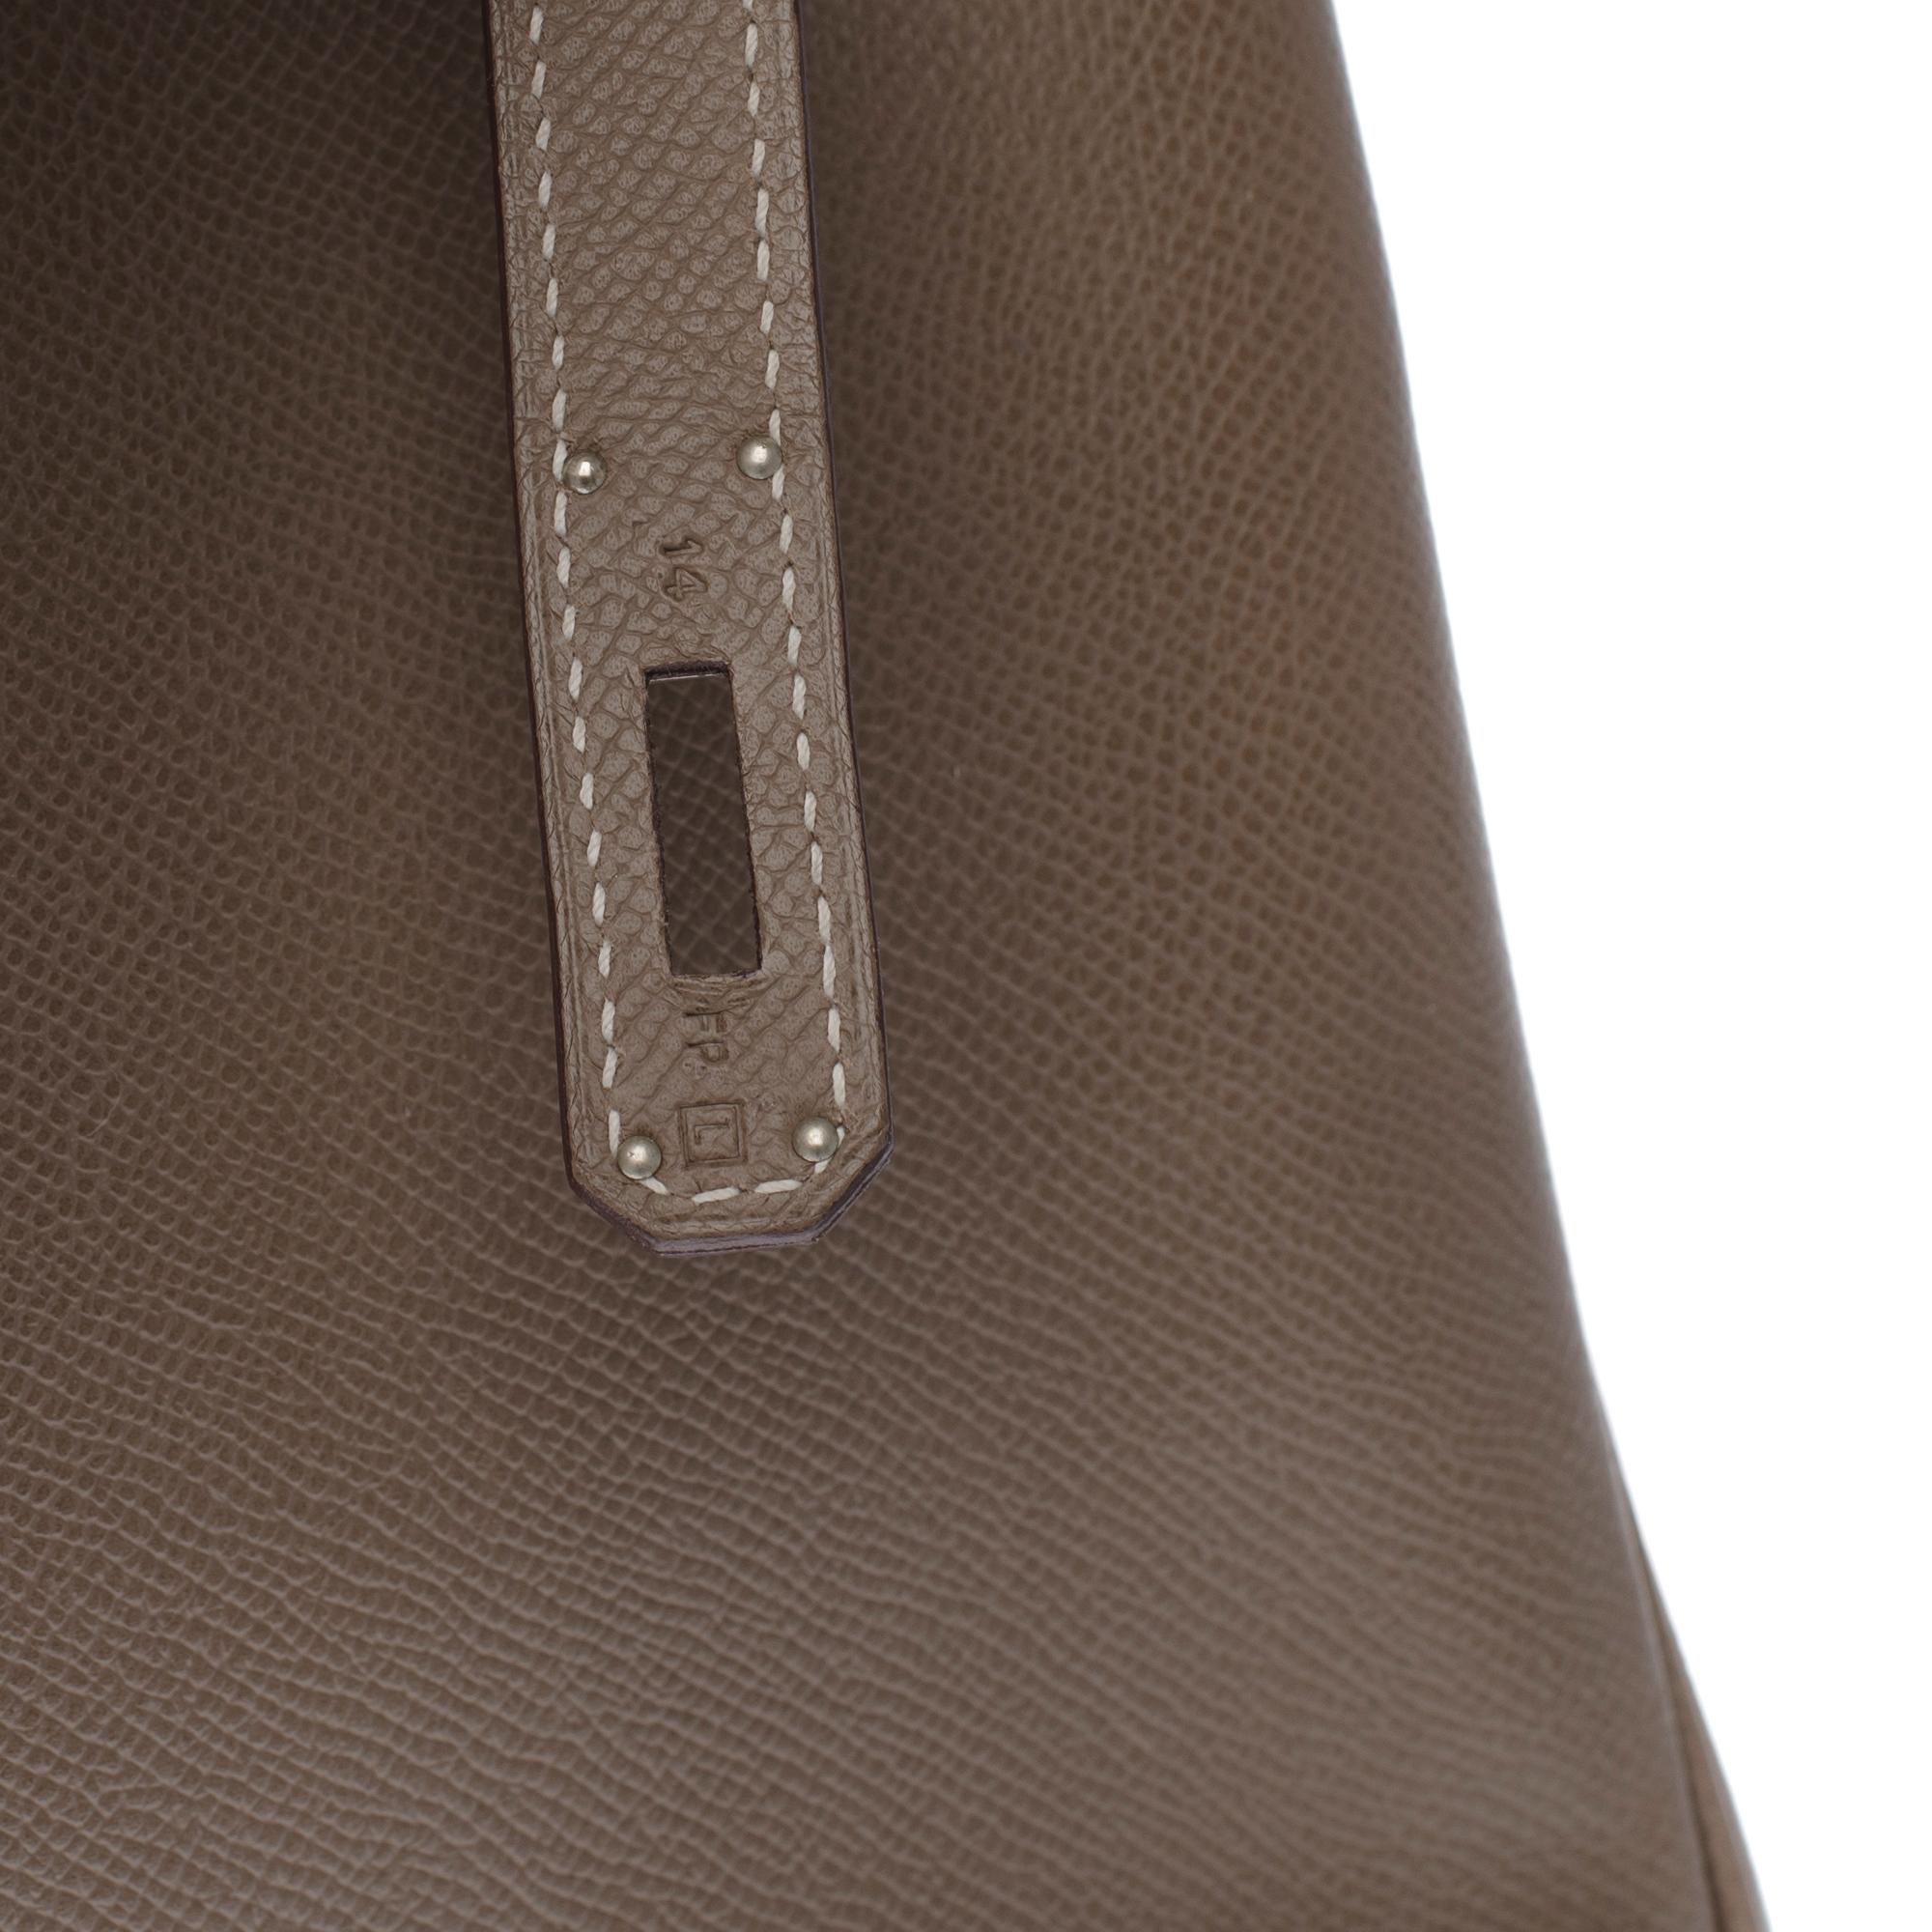 Stunning Hermes Birkin 40cm handbag in Brown Togo leather with gold hardware 1